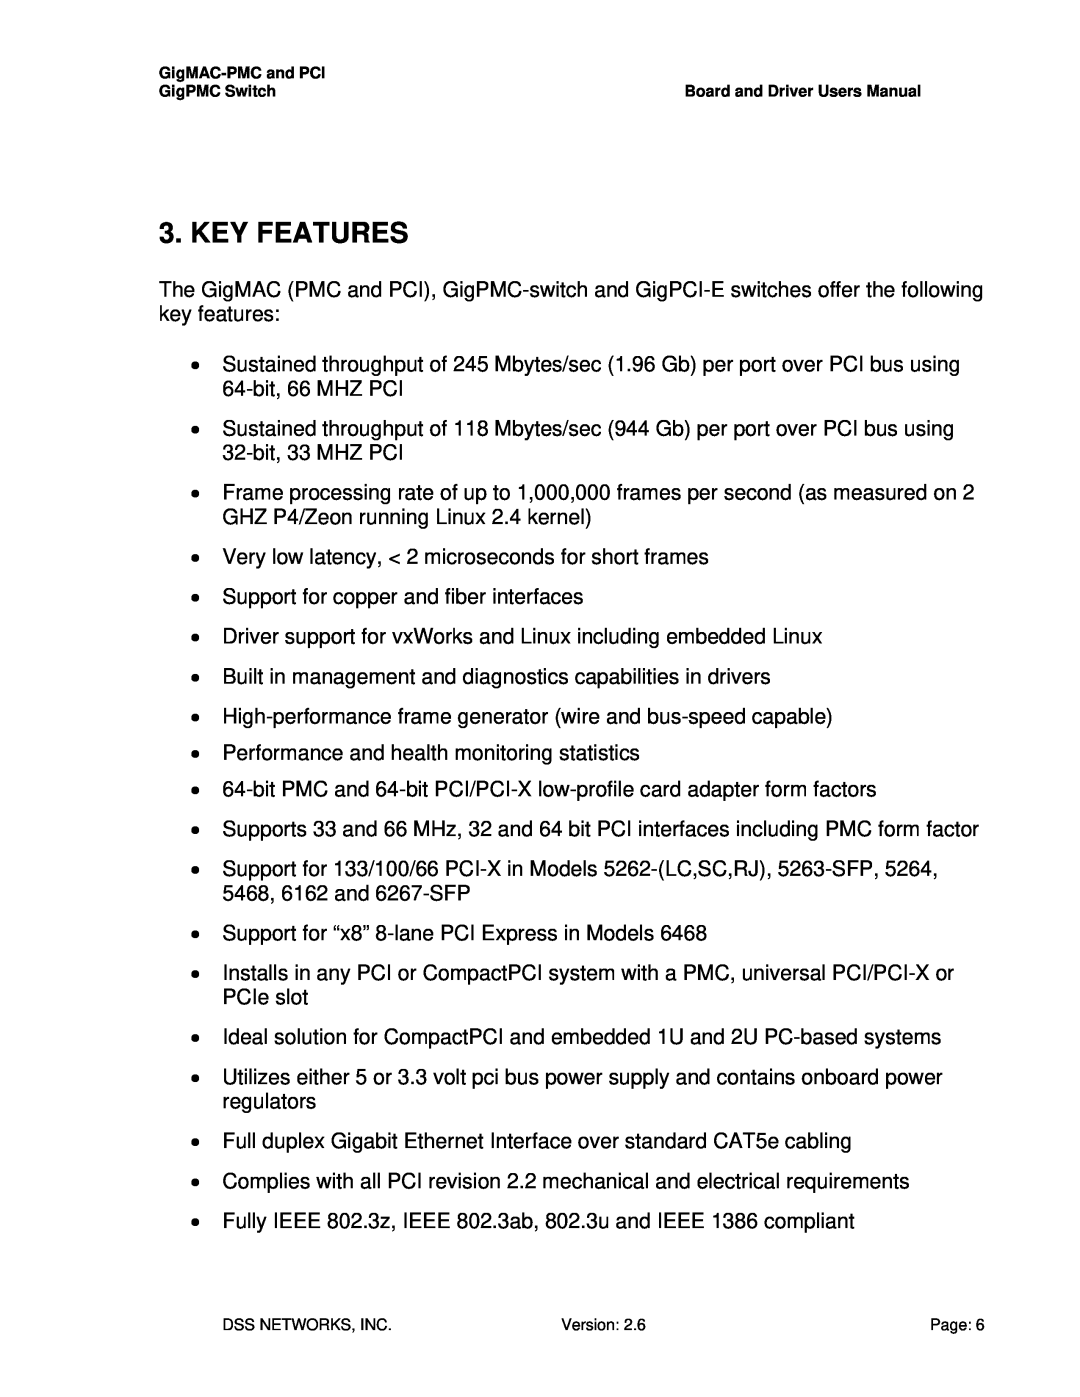 Intel PCI-X user manual Key Features 